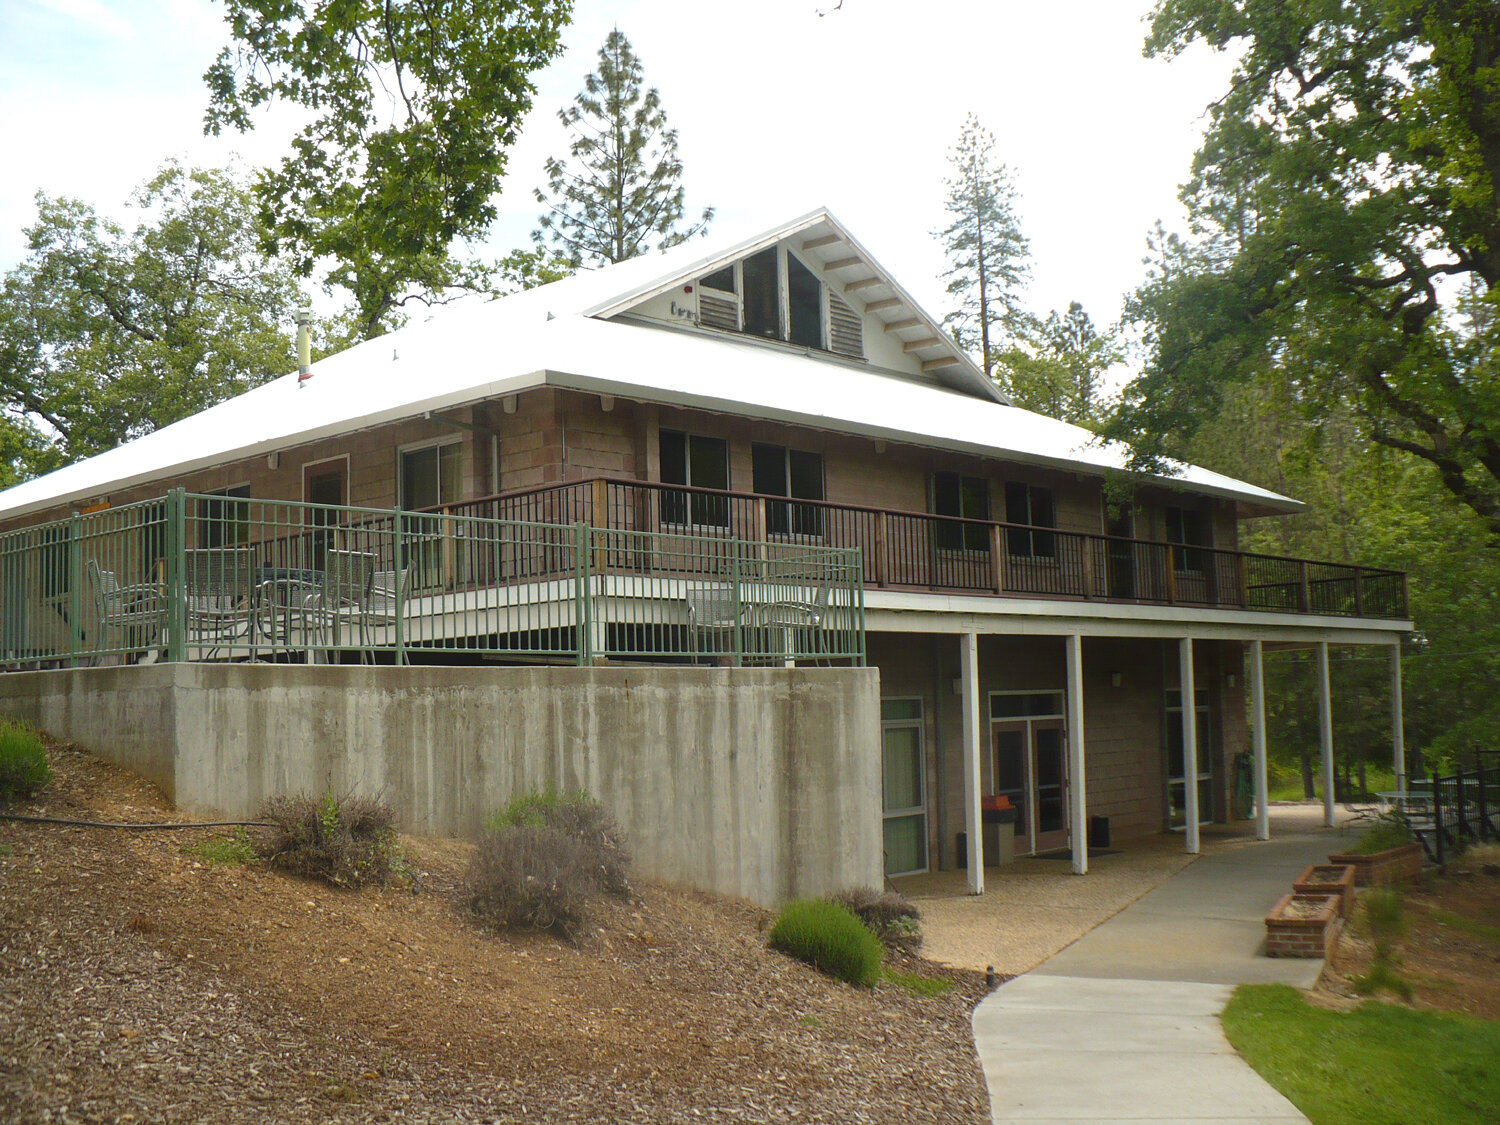 Redwood Lodge